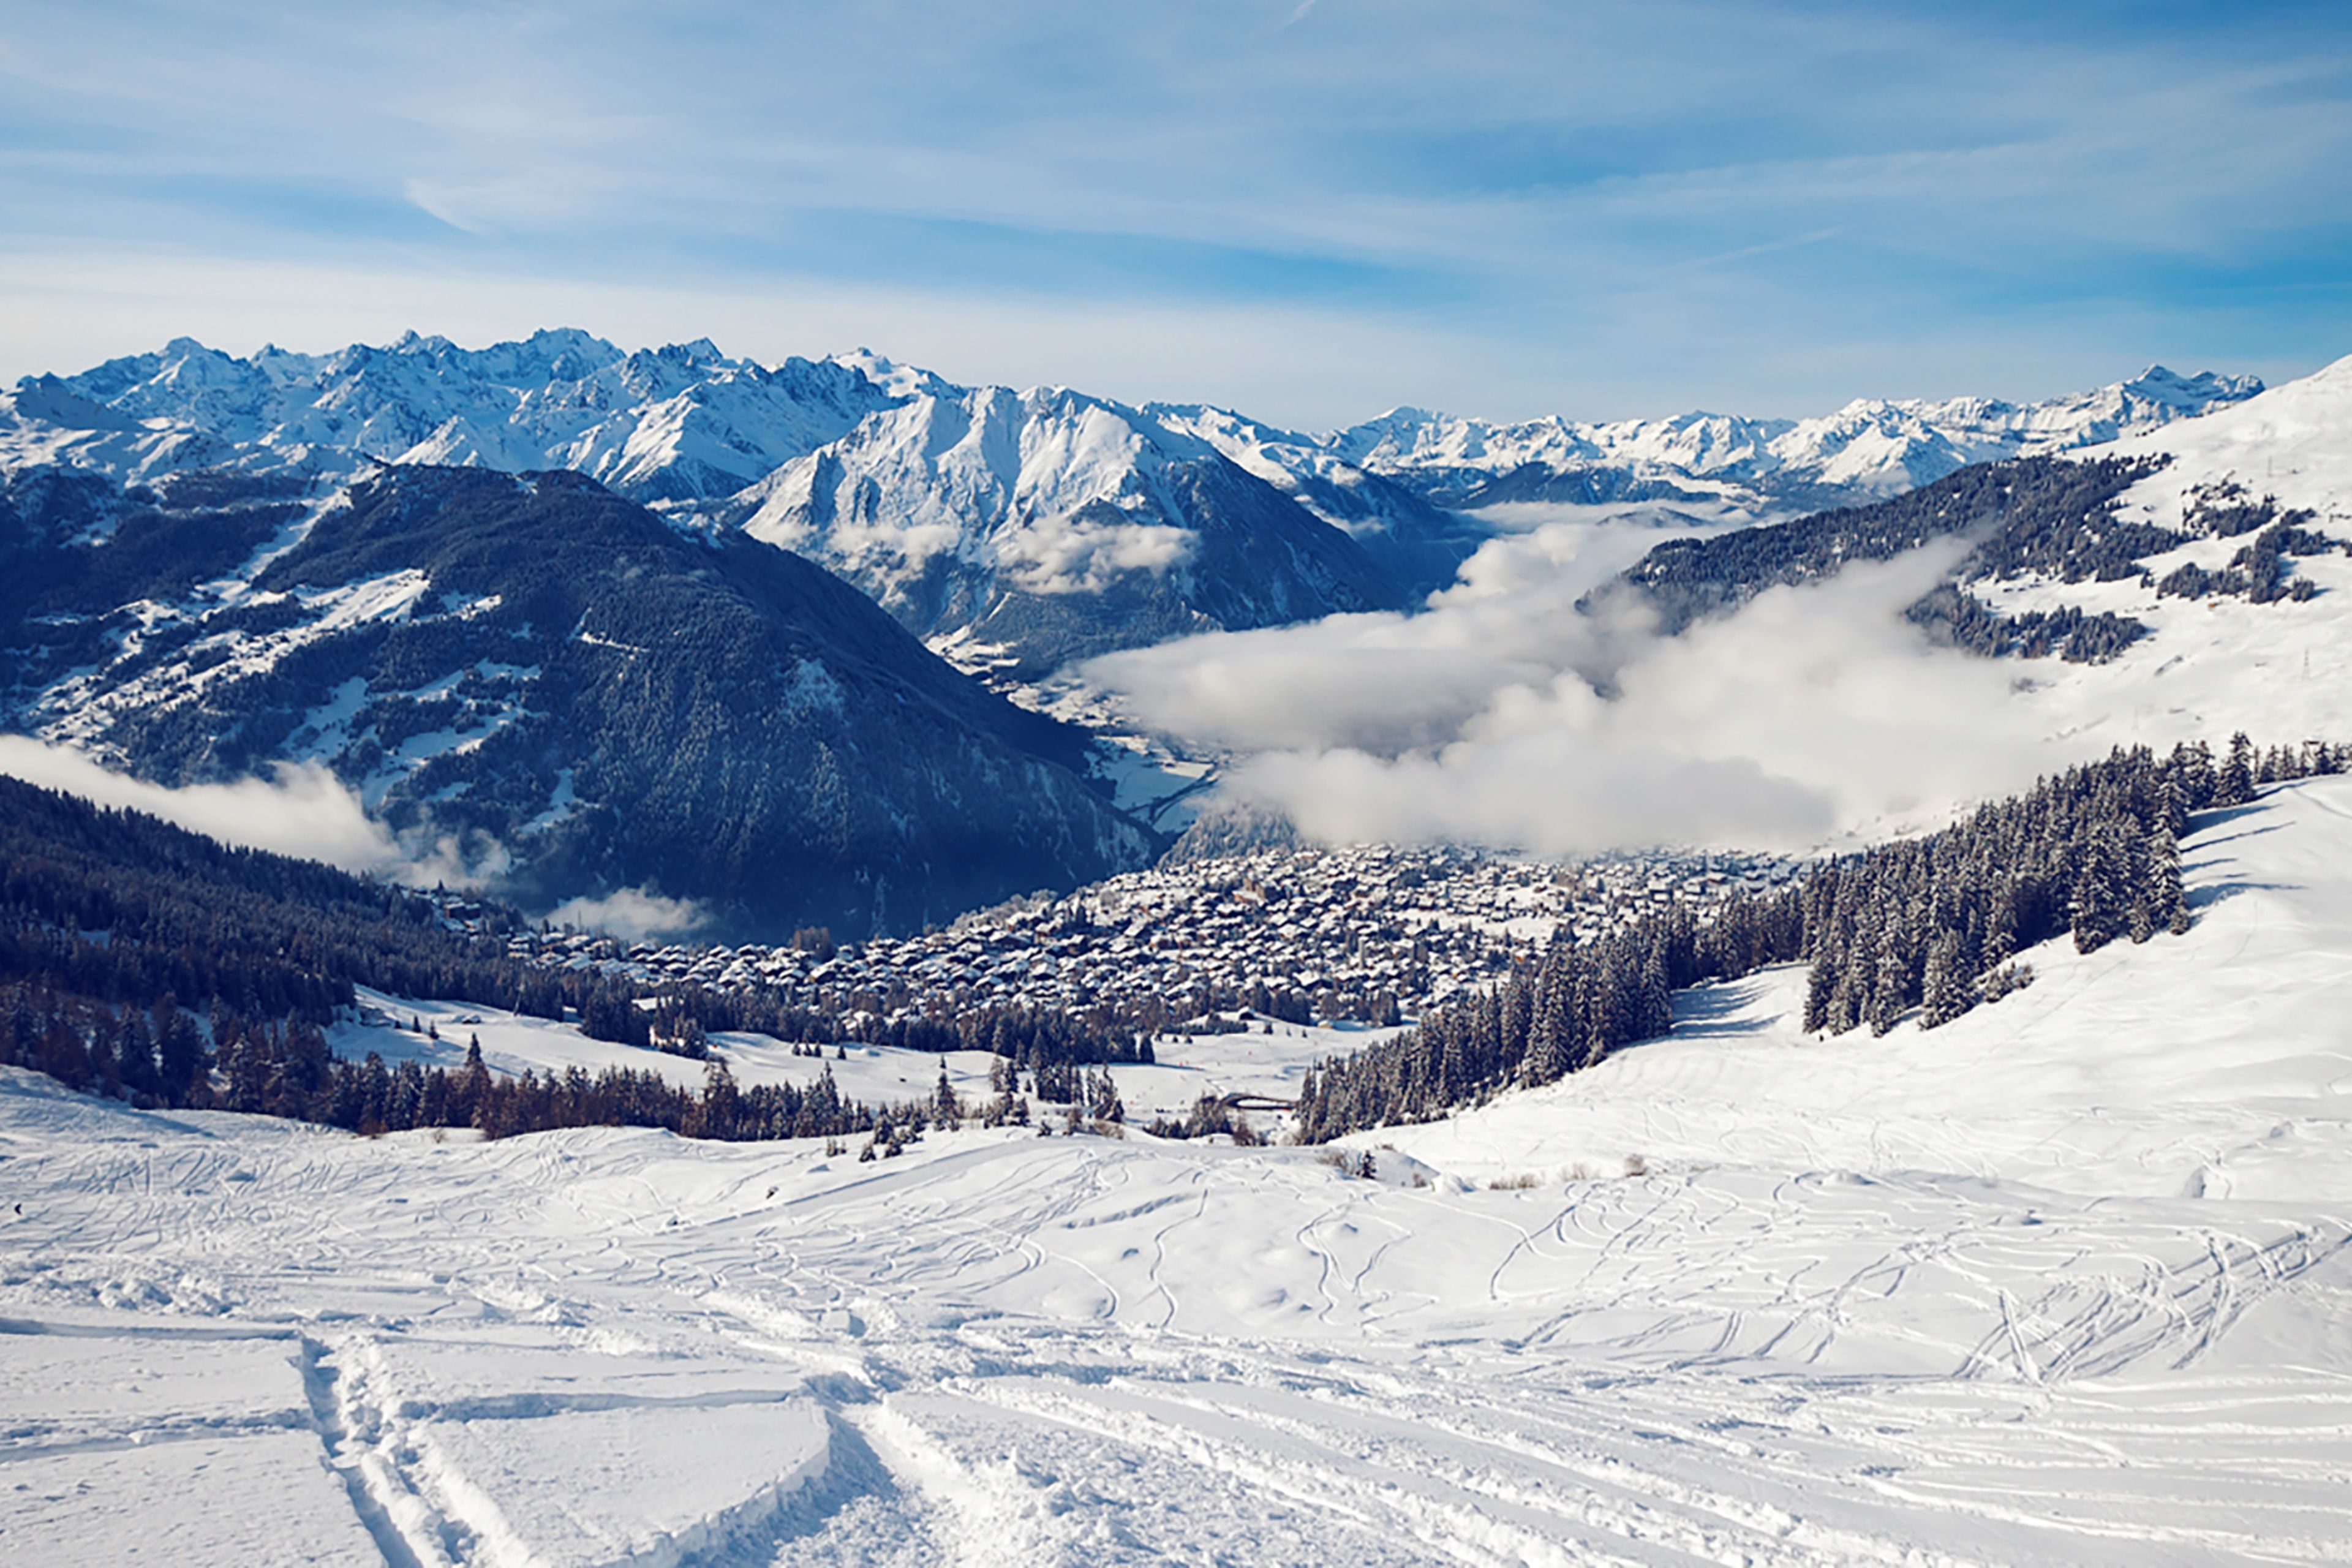 Domaine skiable de Verbier, 4 Vallées, Valais